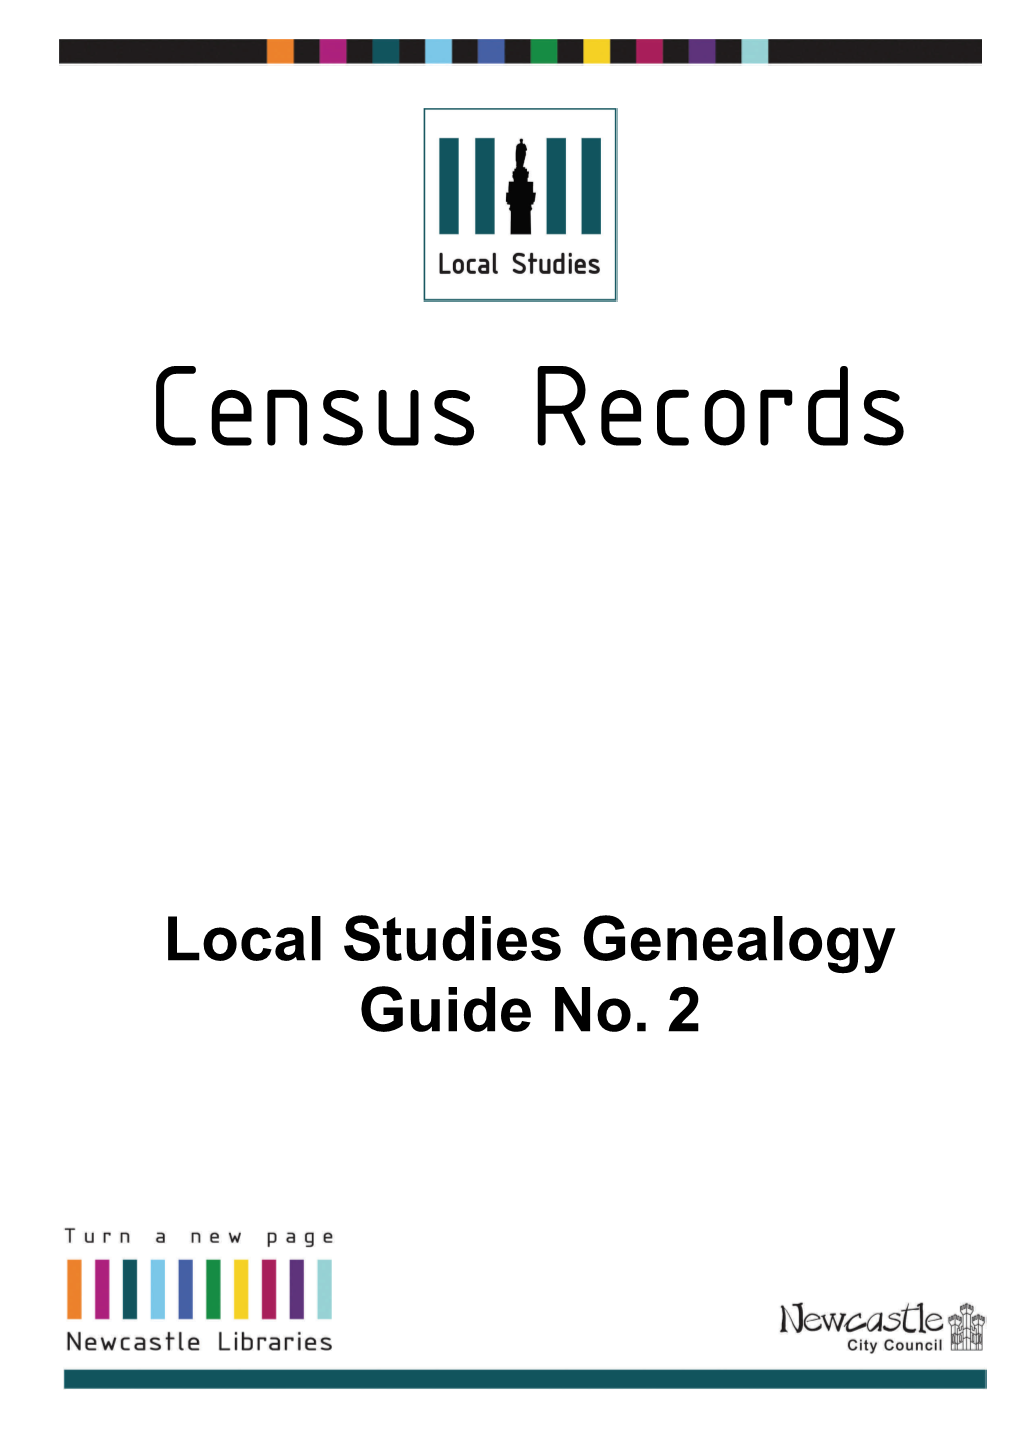 Census Returns for Newcastle 1841